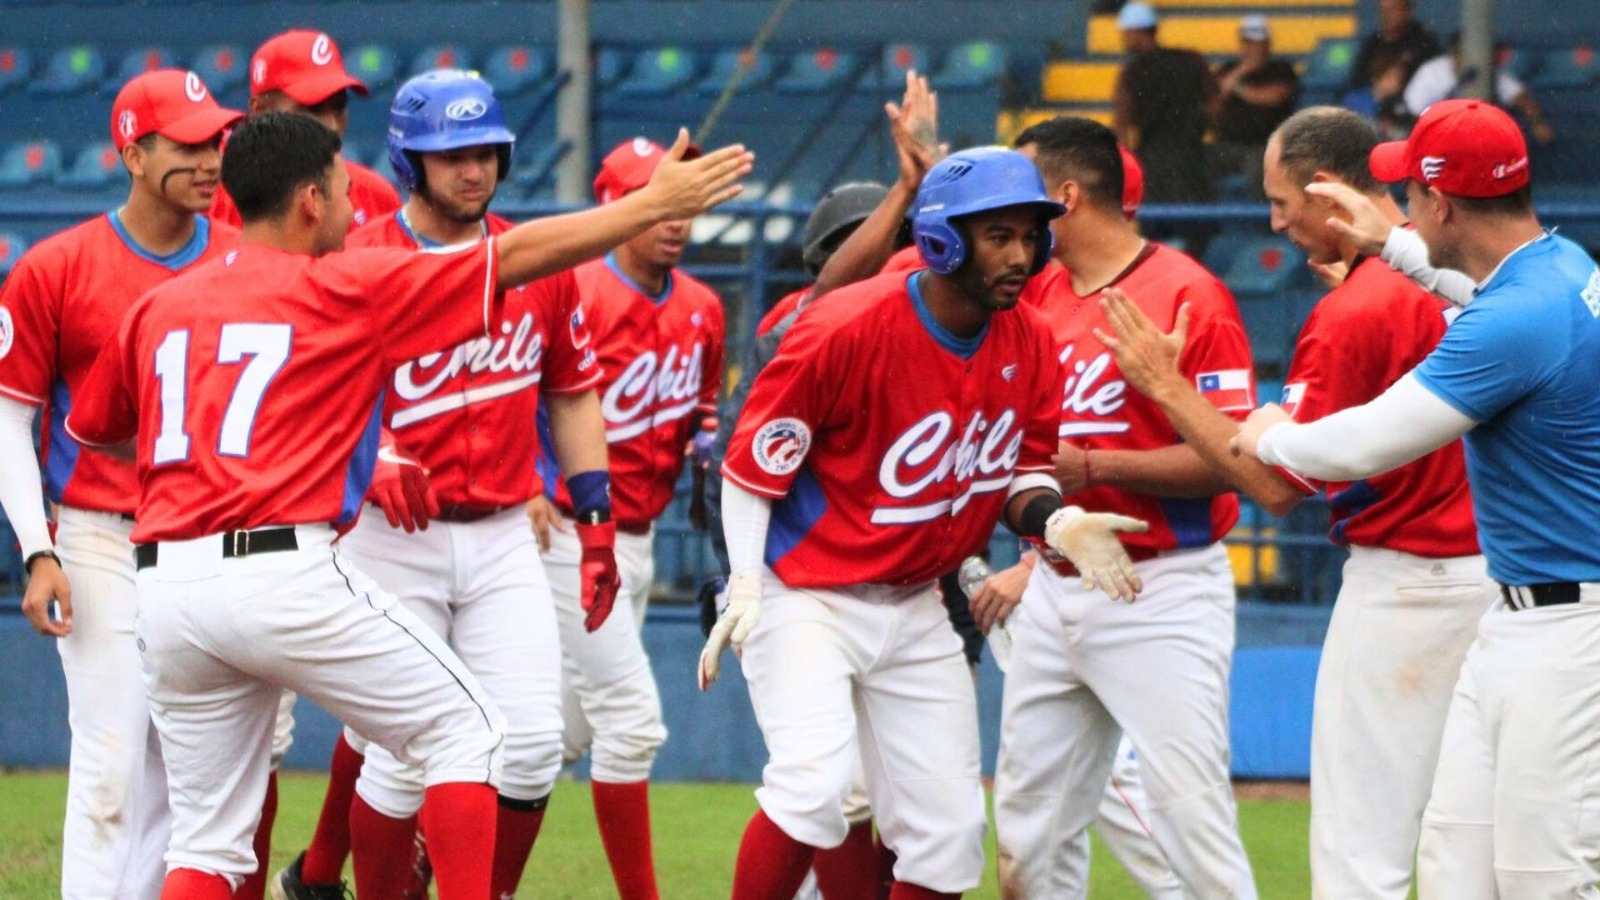 October 18th Program: Santiago 2023’s sport action begins with Baseball